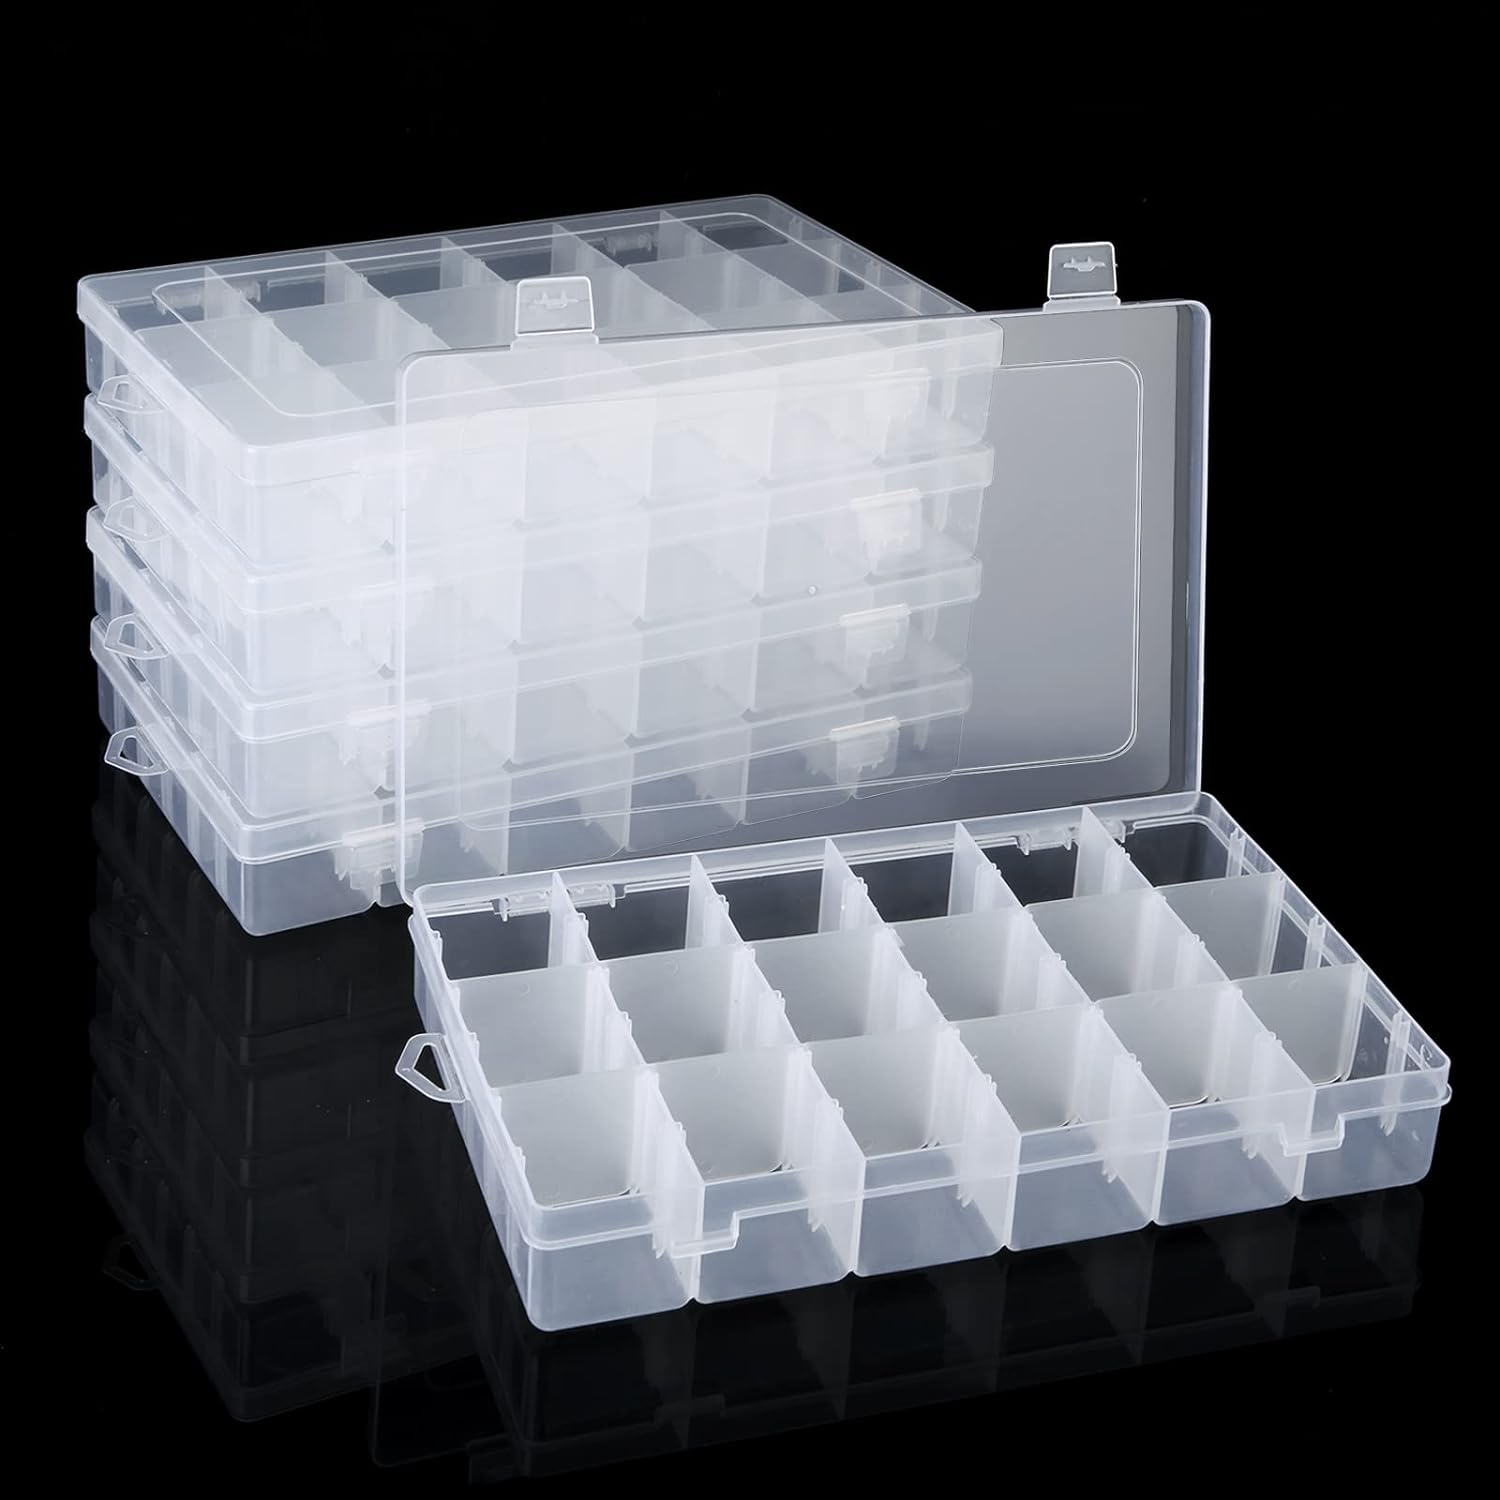 Qualsen Plastic Compartment Box with Adjustable Dividers Craft Tackle Organizer